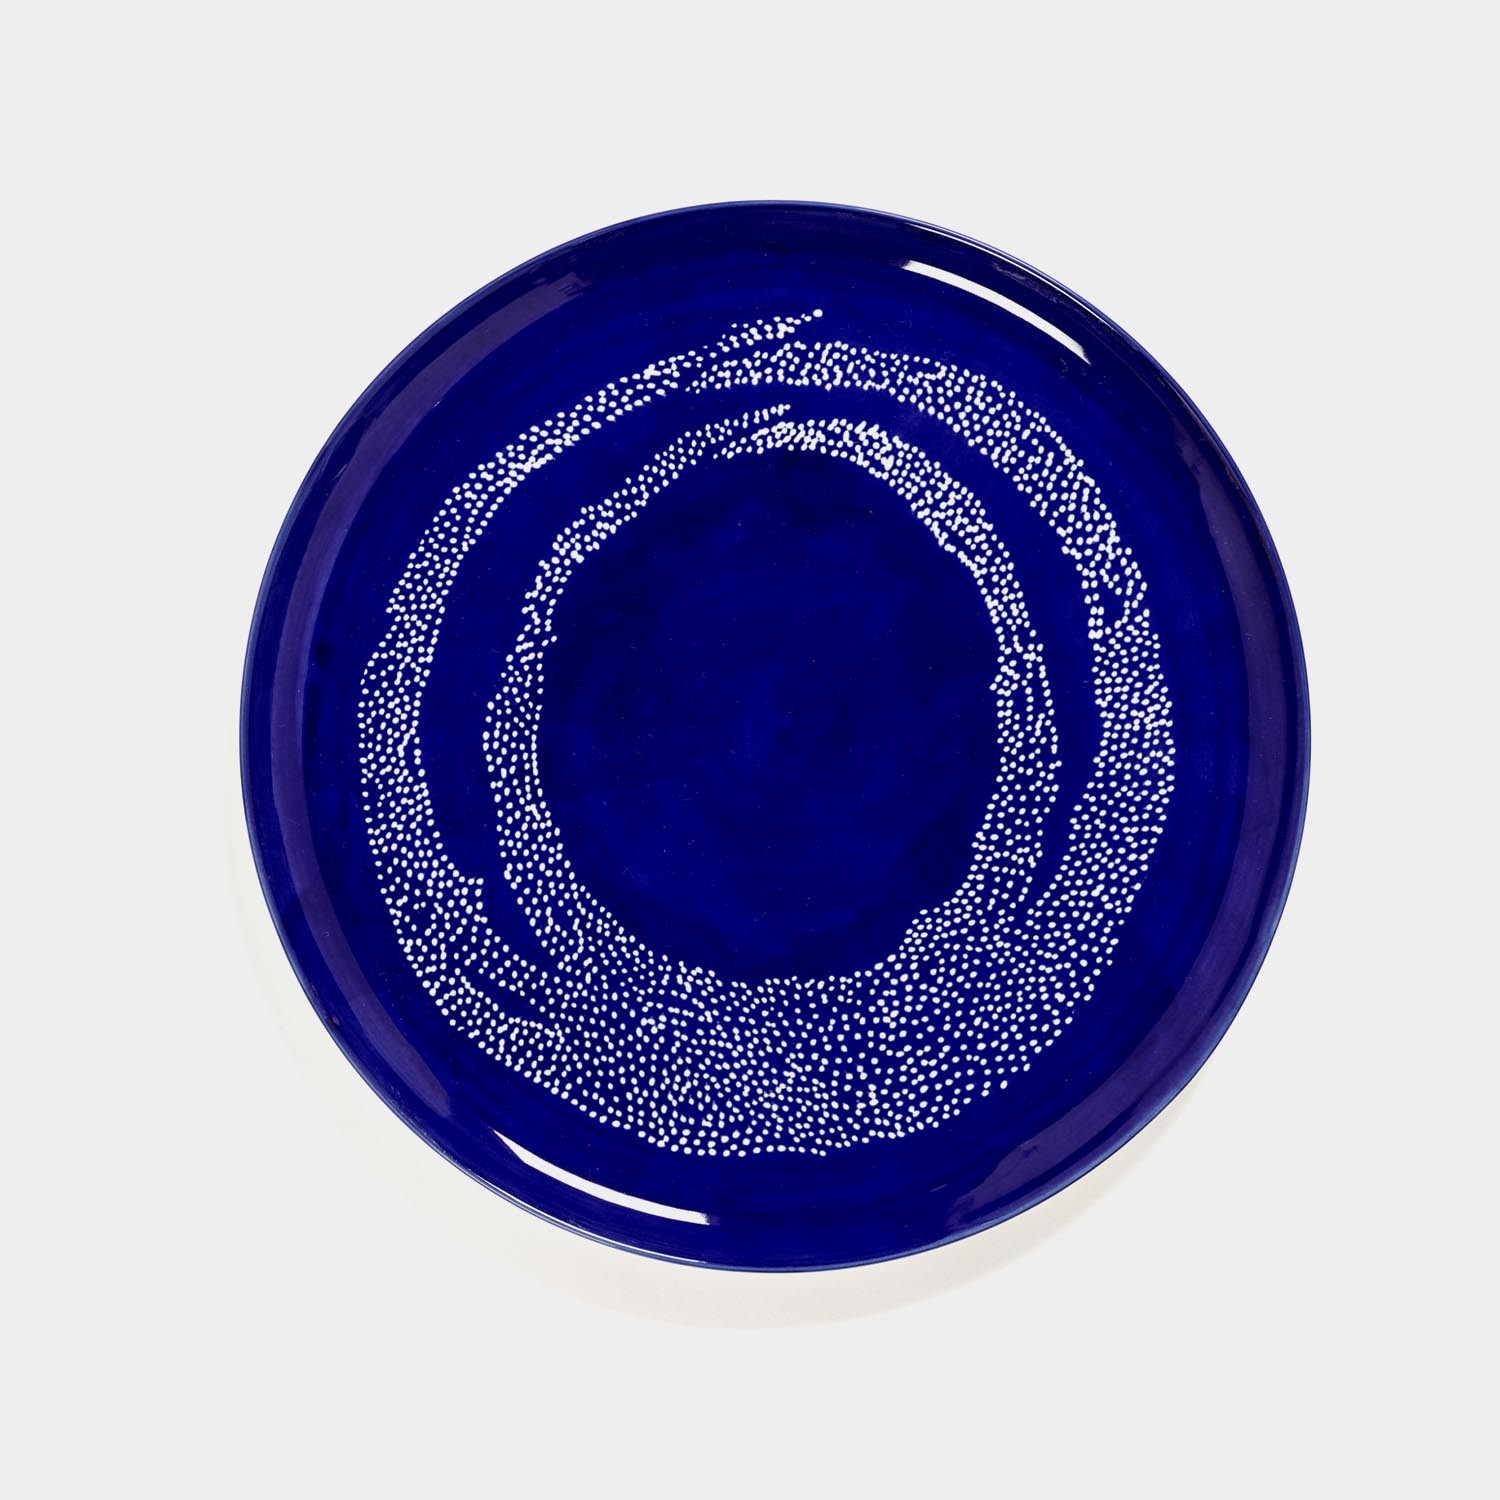 Presentation Plate, Feast, Lapis Lazuli with White Dots Swirl